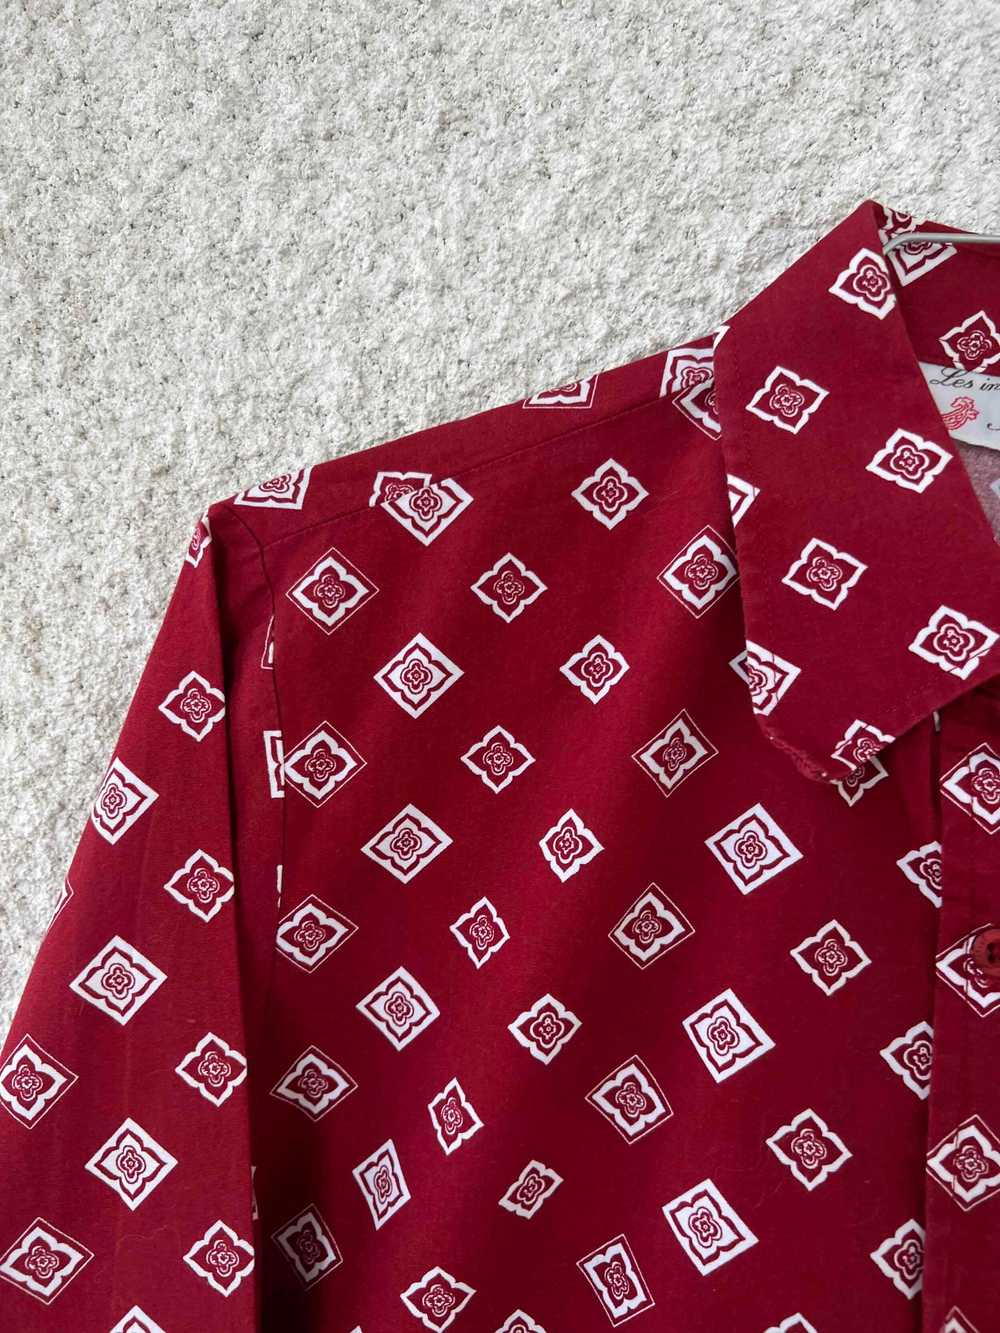 Provencal shirt - Provençal burgundy cotton blouse - image 3